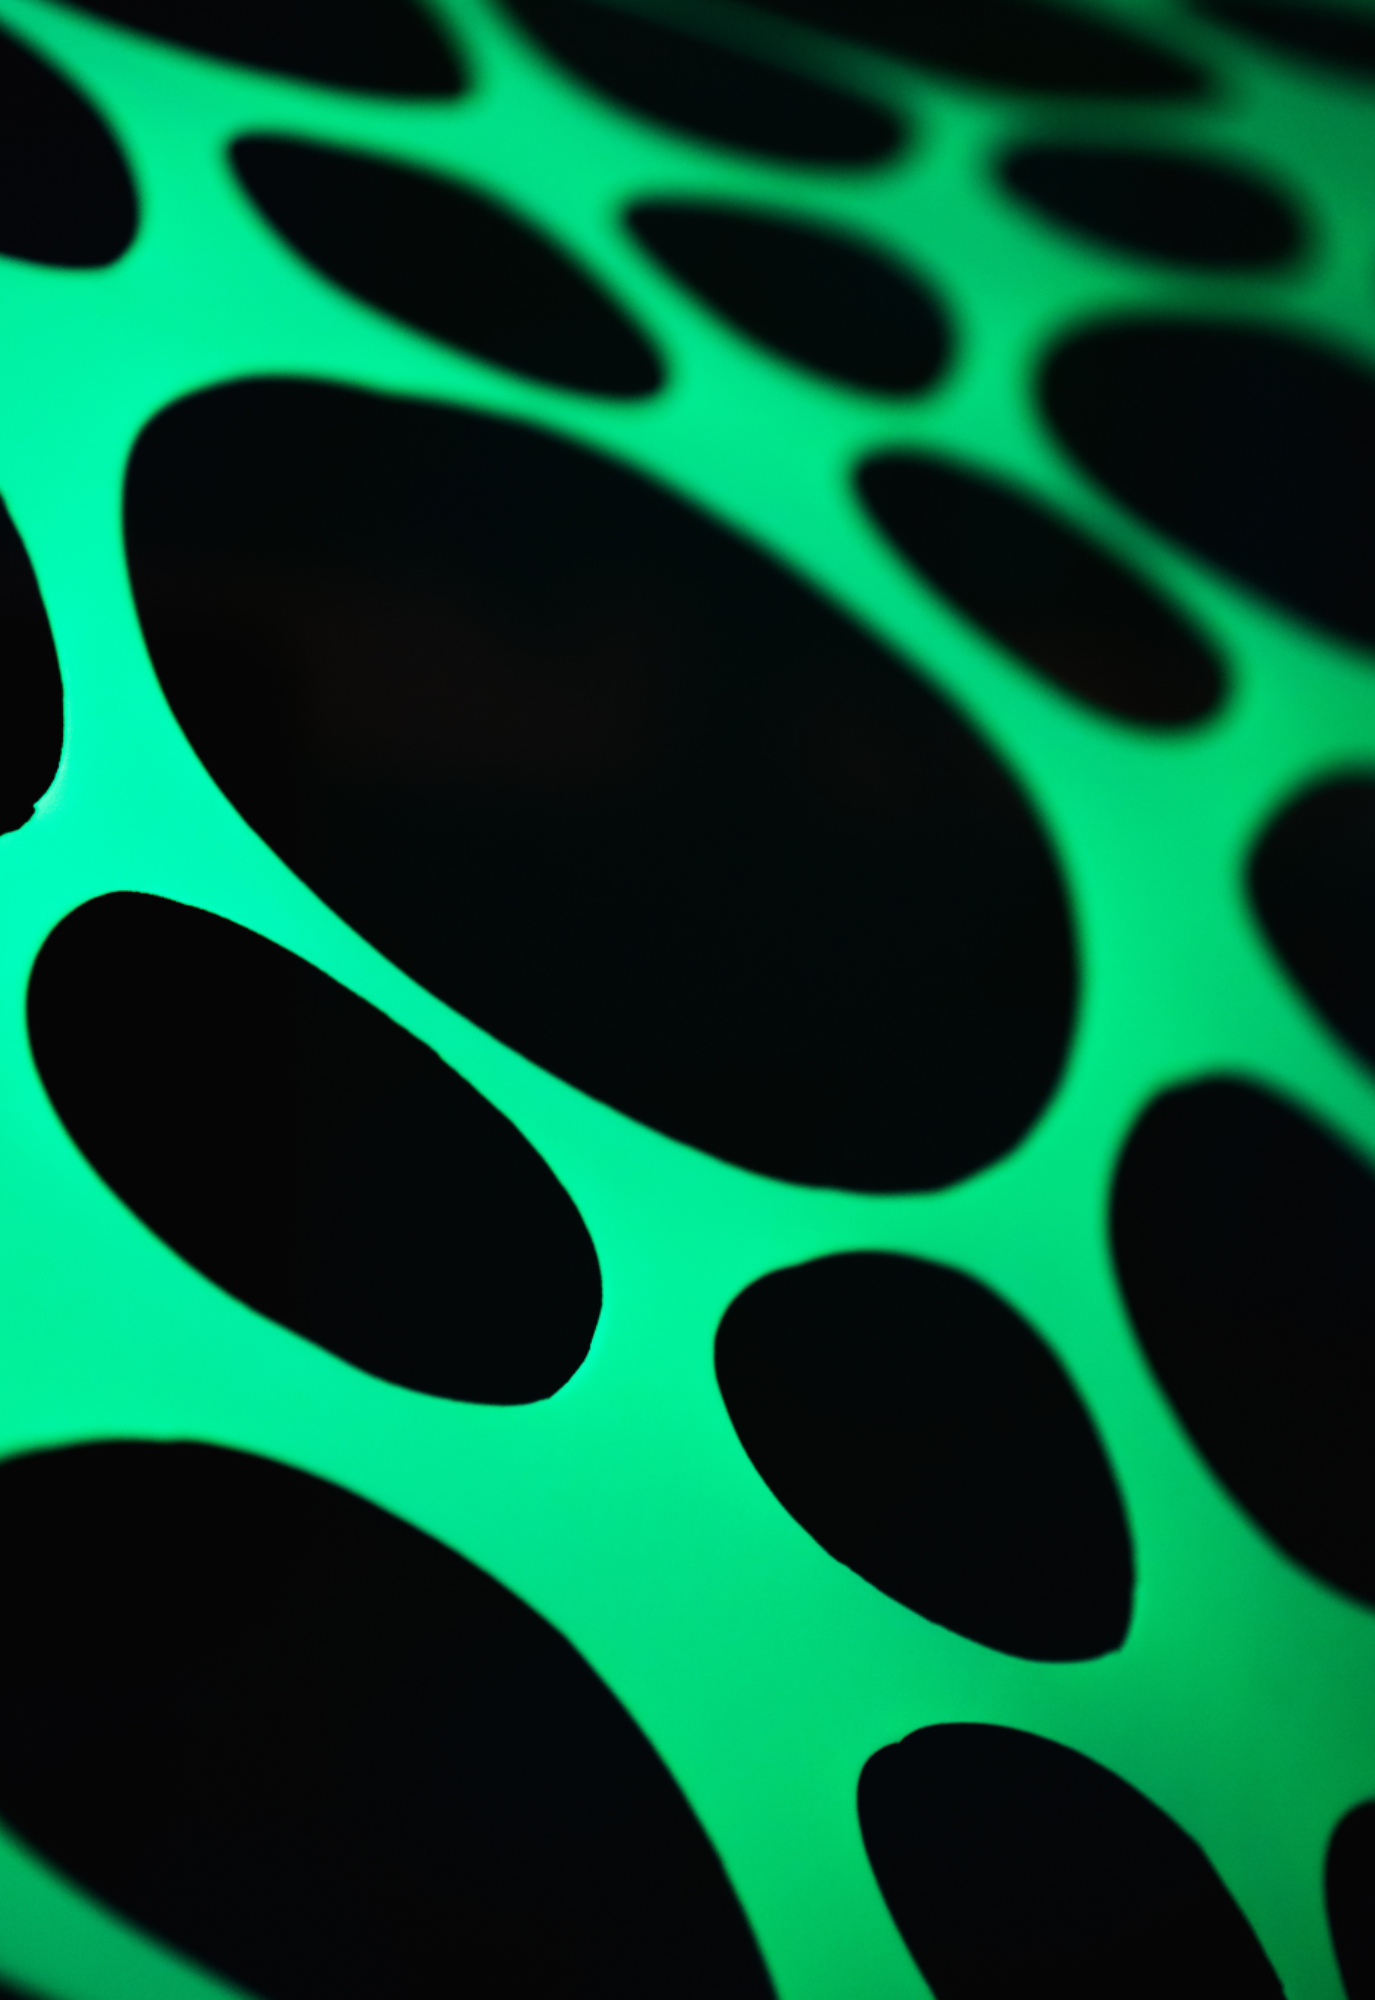 UV Reactive green polka dot event decorations.